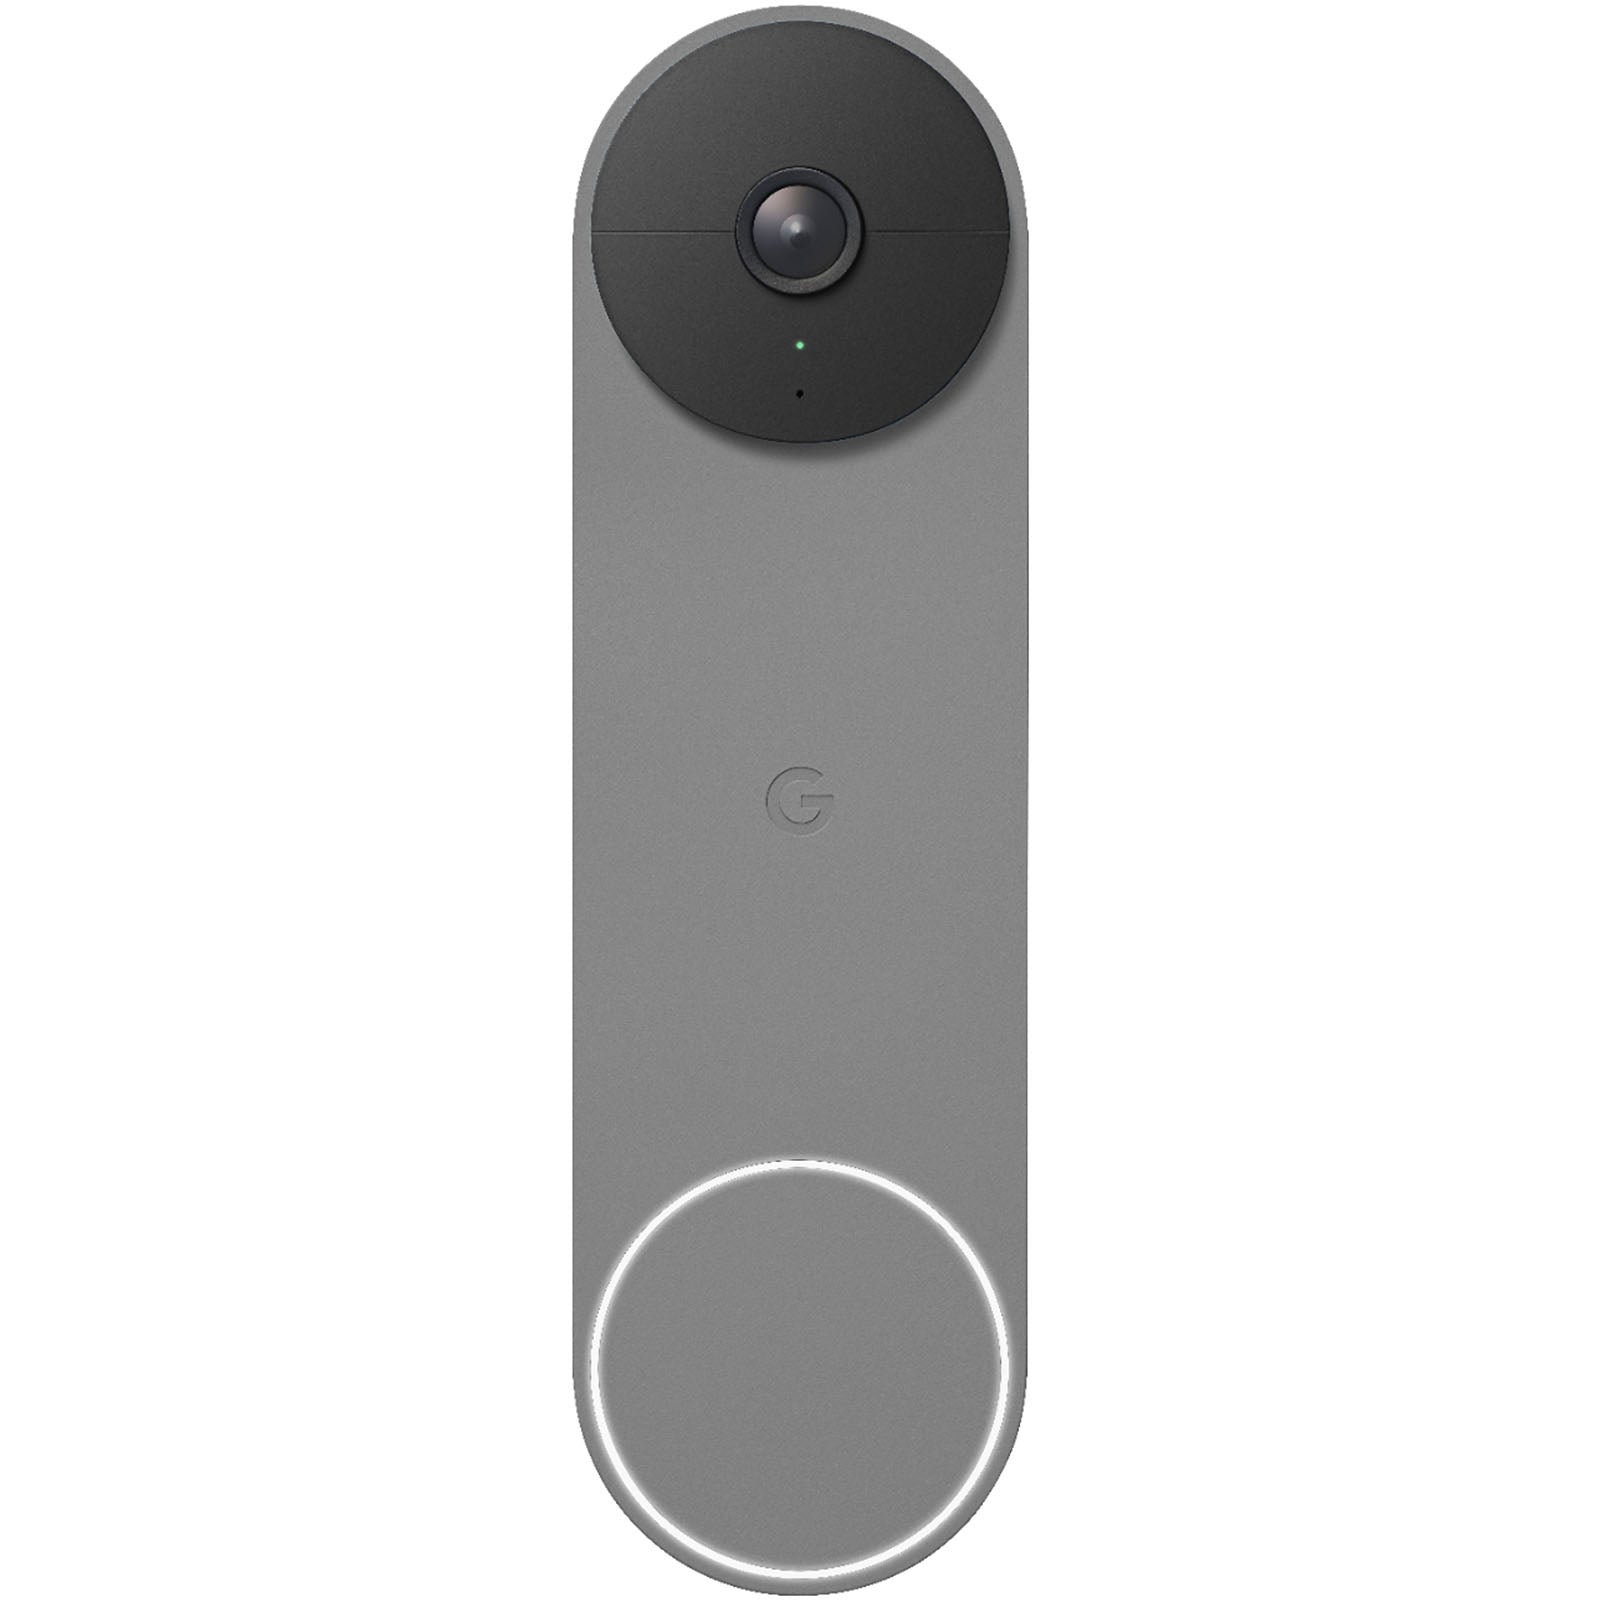 Google Nest Video Doorbell, WiFi, Battery Power with Motion Sensor, 2 Way Audio - Ash - Pro-Distributing